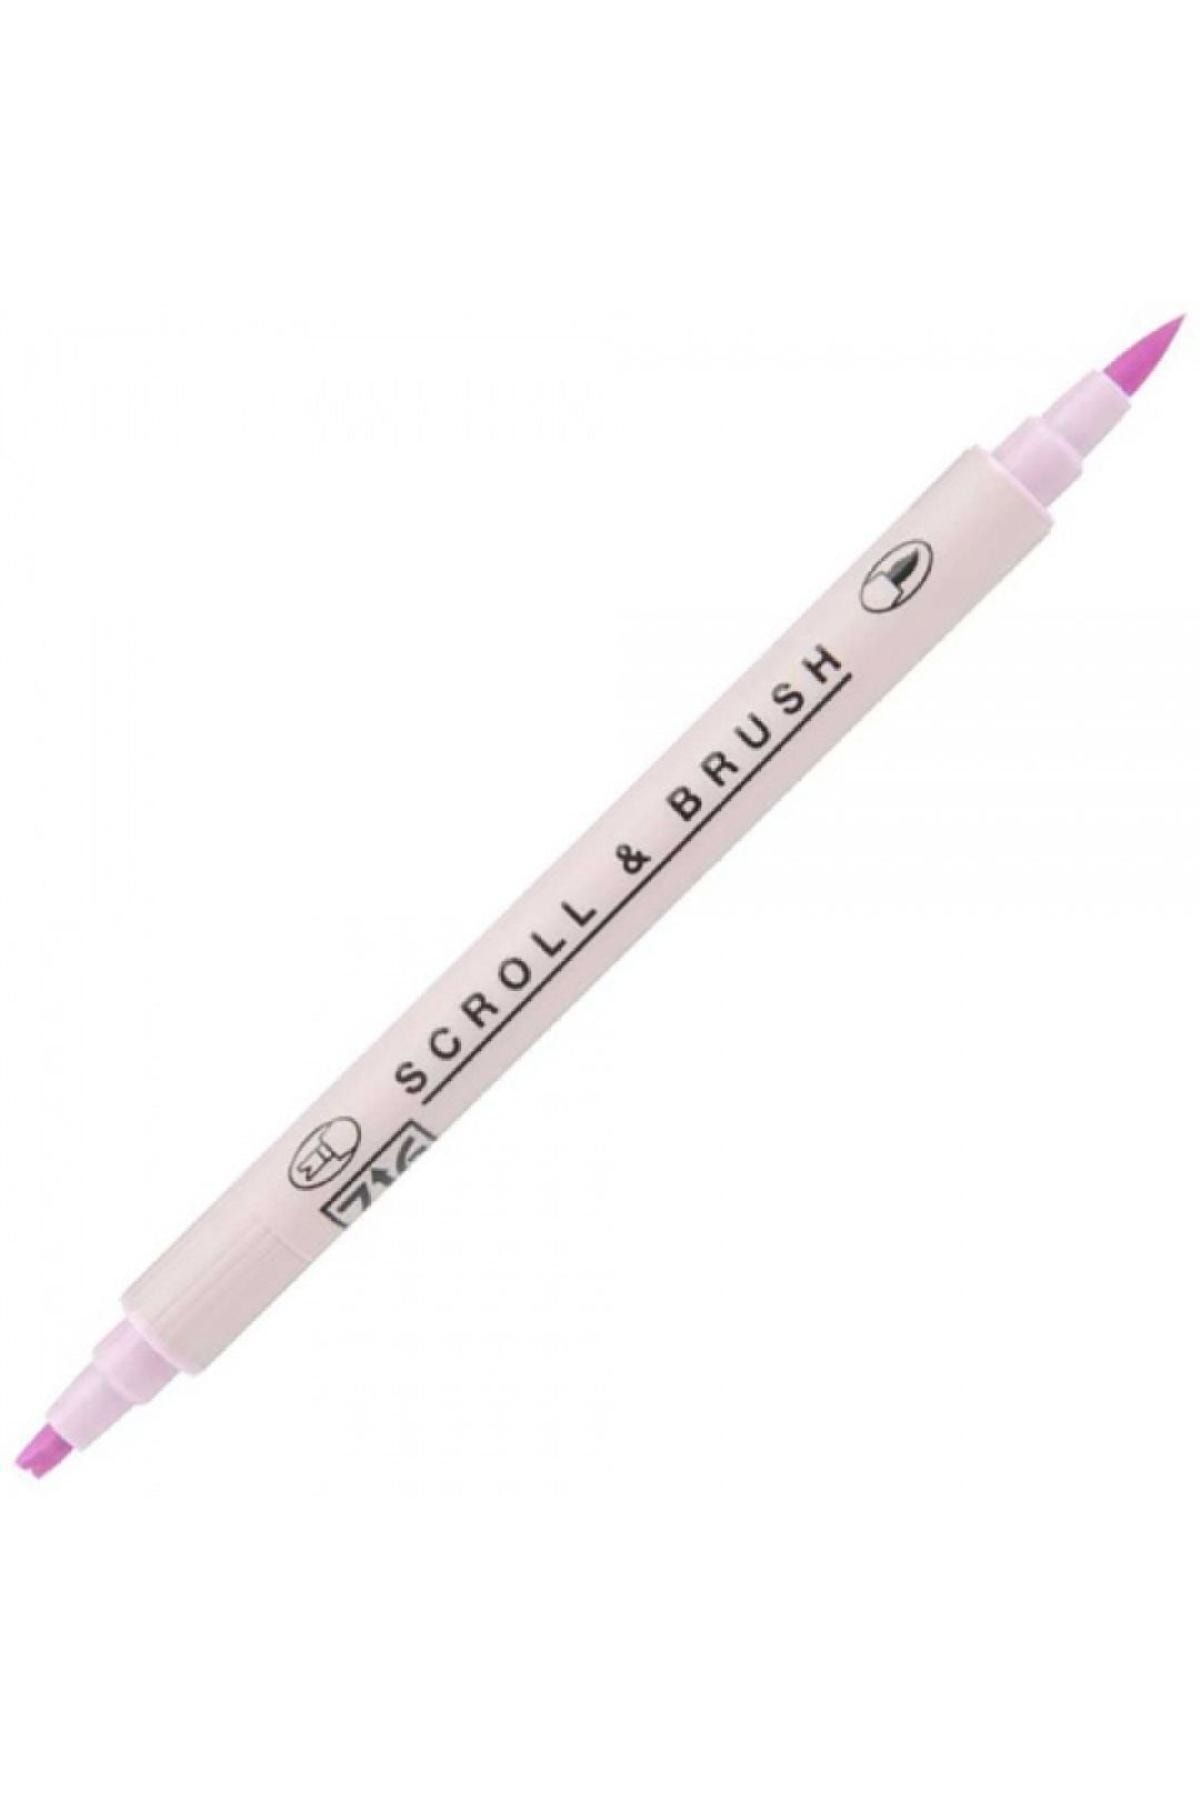 Zig Scroll & Brush Pen Çift Çizgi Kaligrafi Kalemi Candy Pink 206